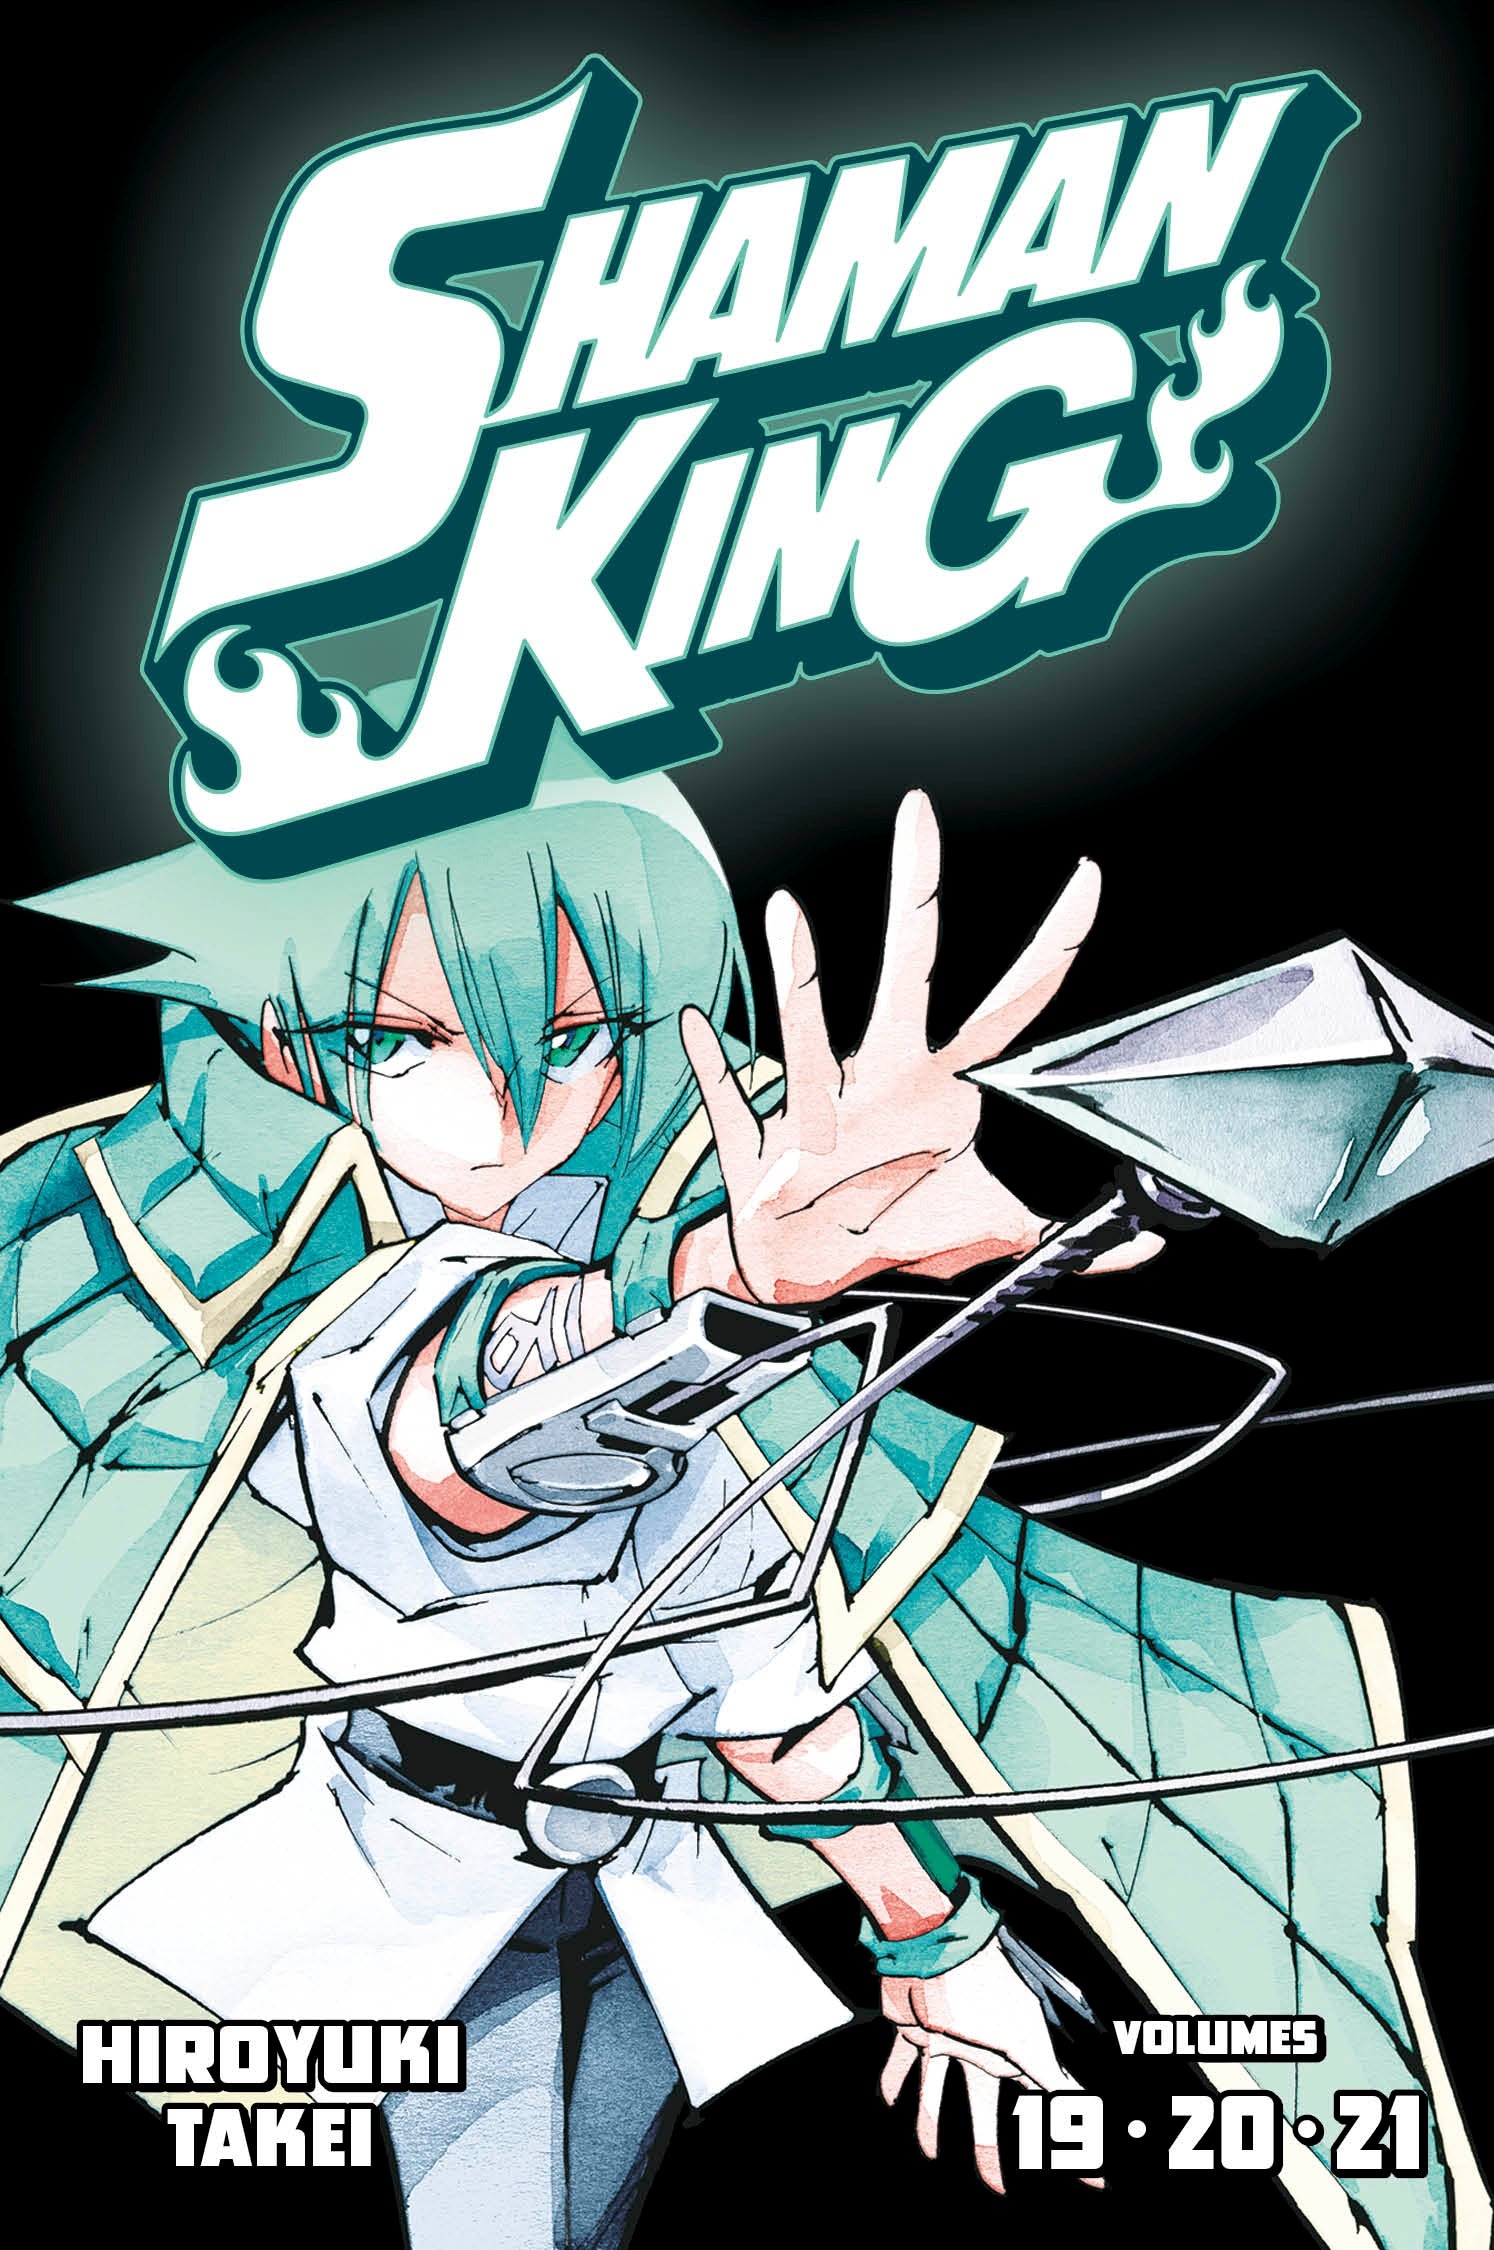 SHAMAN KING Omnibus 7 (Vol. 19-21) - Manga Warehouse